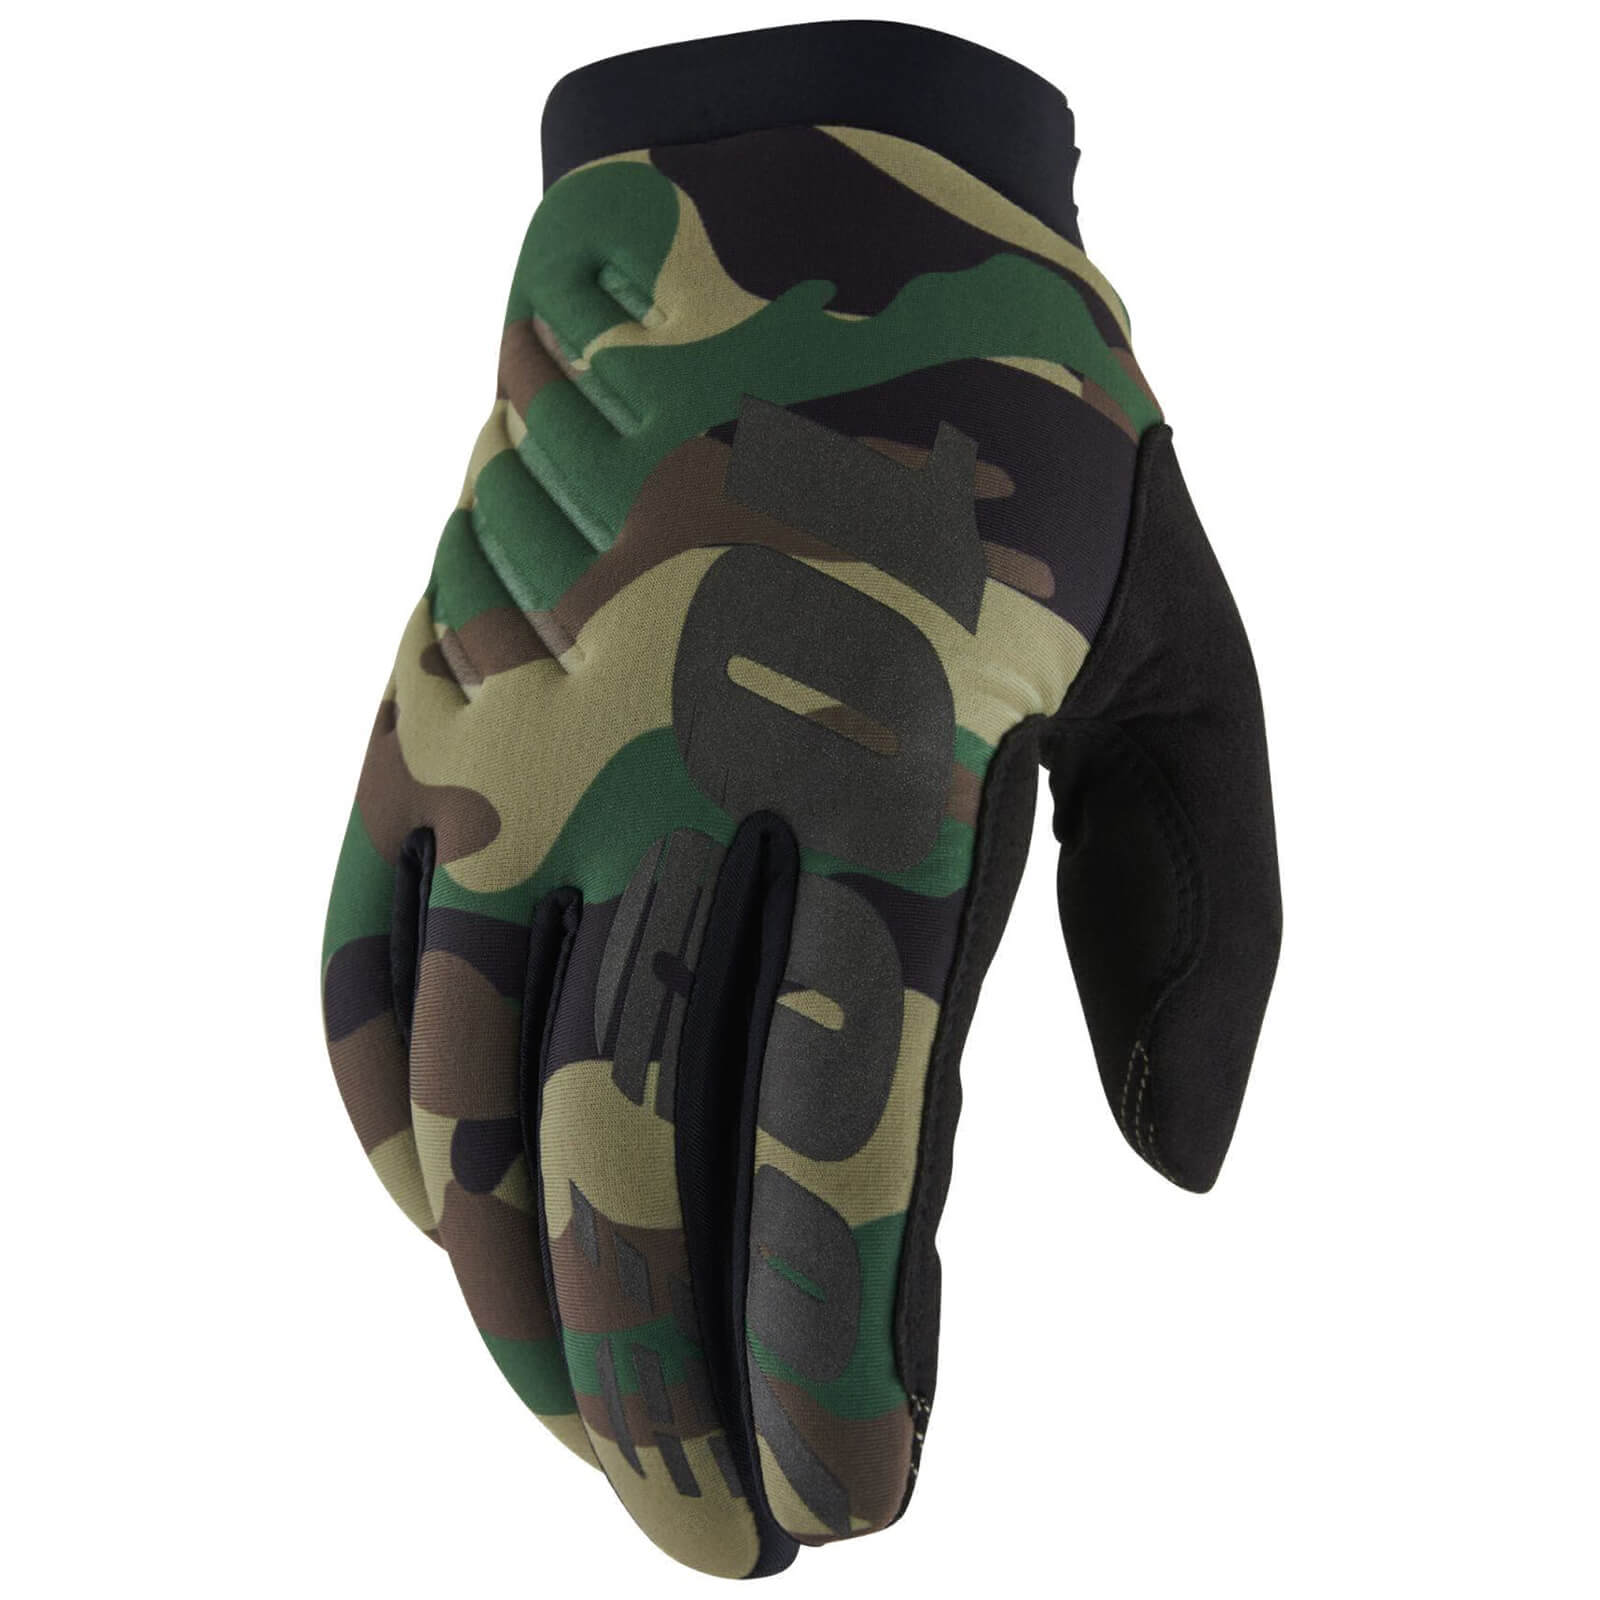 100% Brisker MTB Gloves - S - Camo/Black